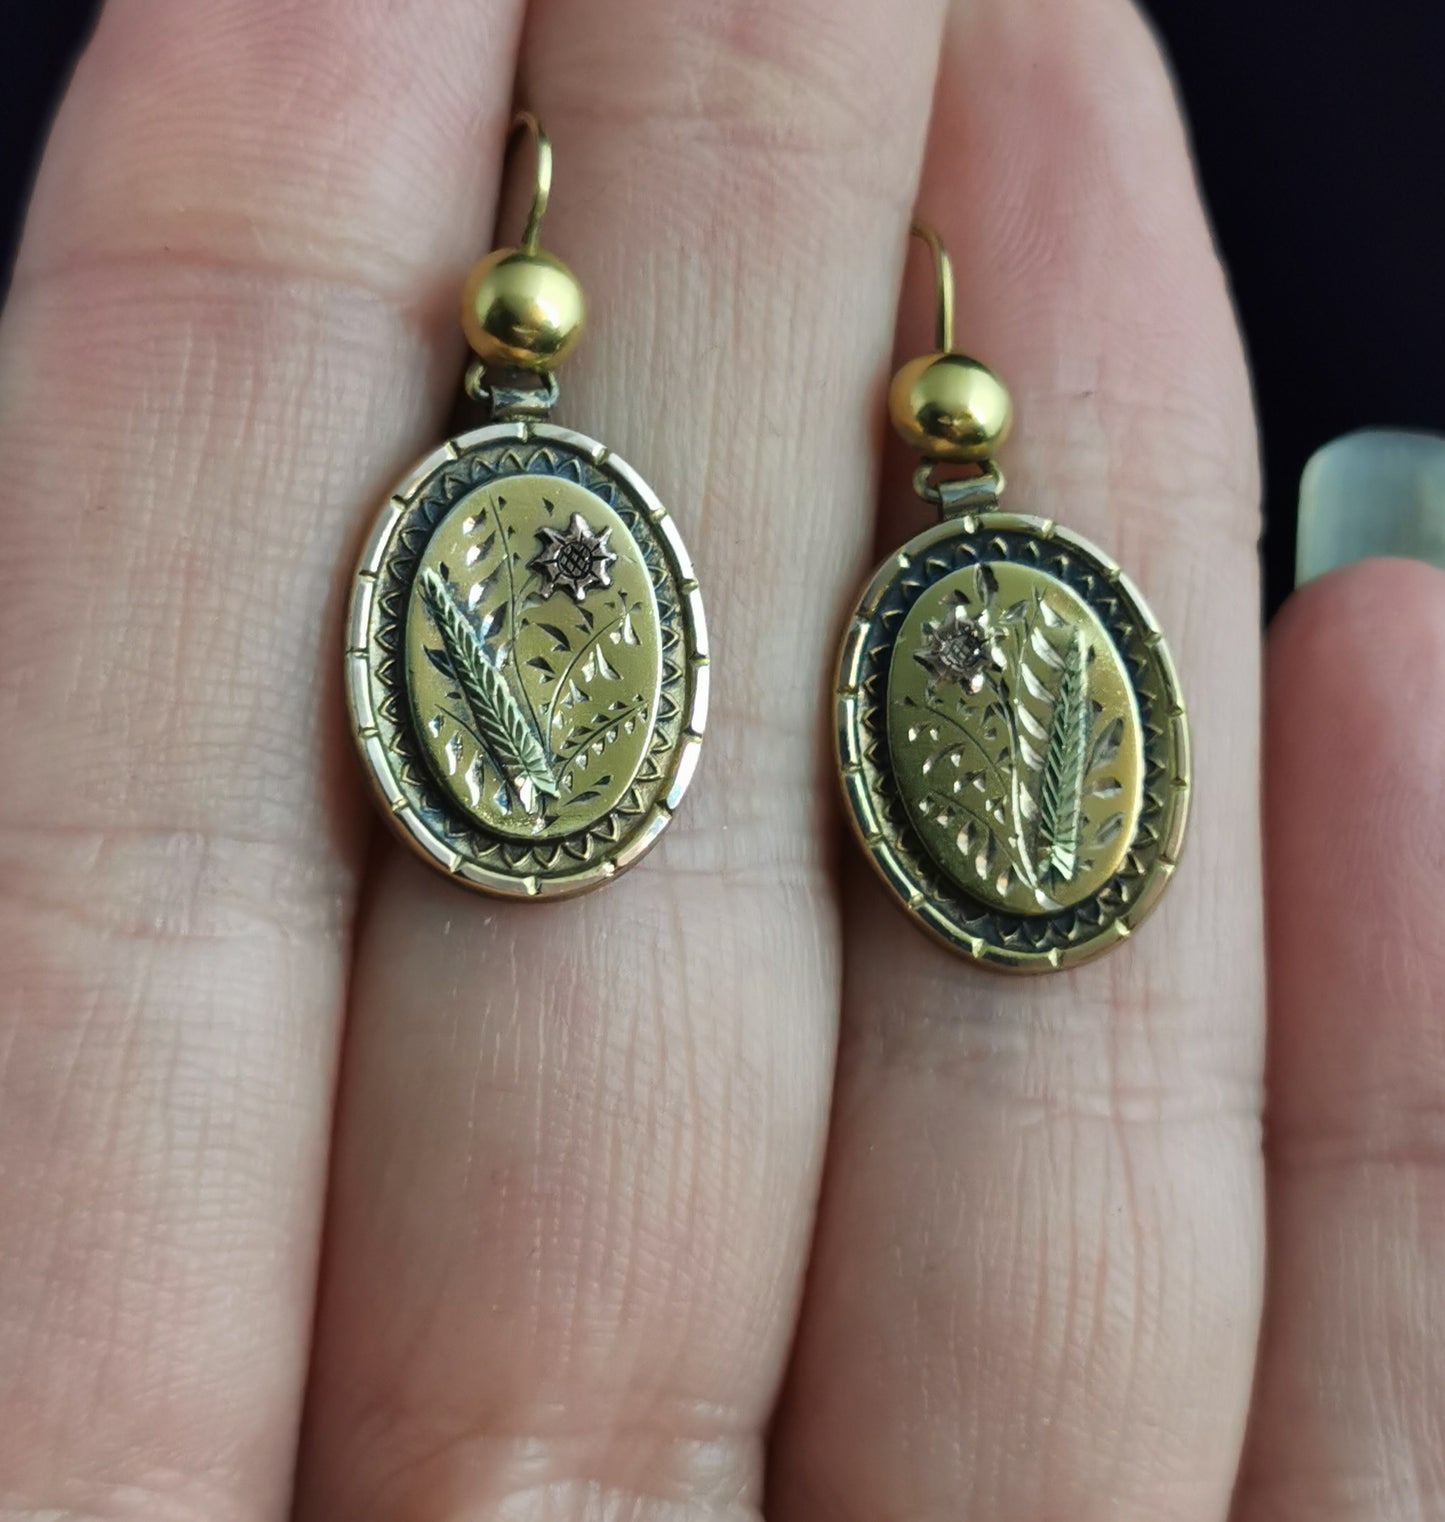 Antique Victorian 10ct gold door knocker earrings, drop earrings, Aesthetic